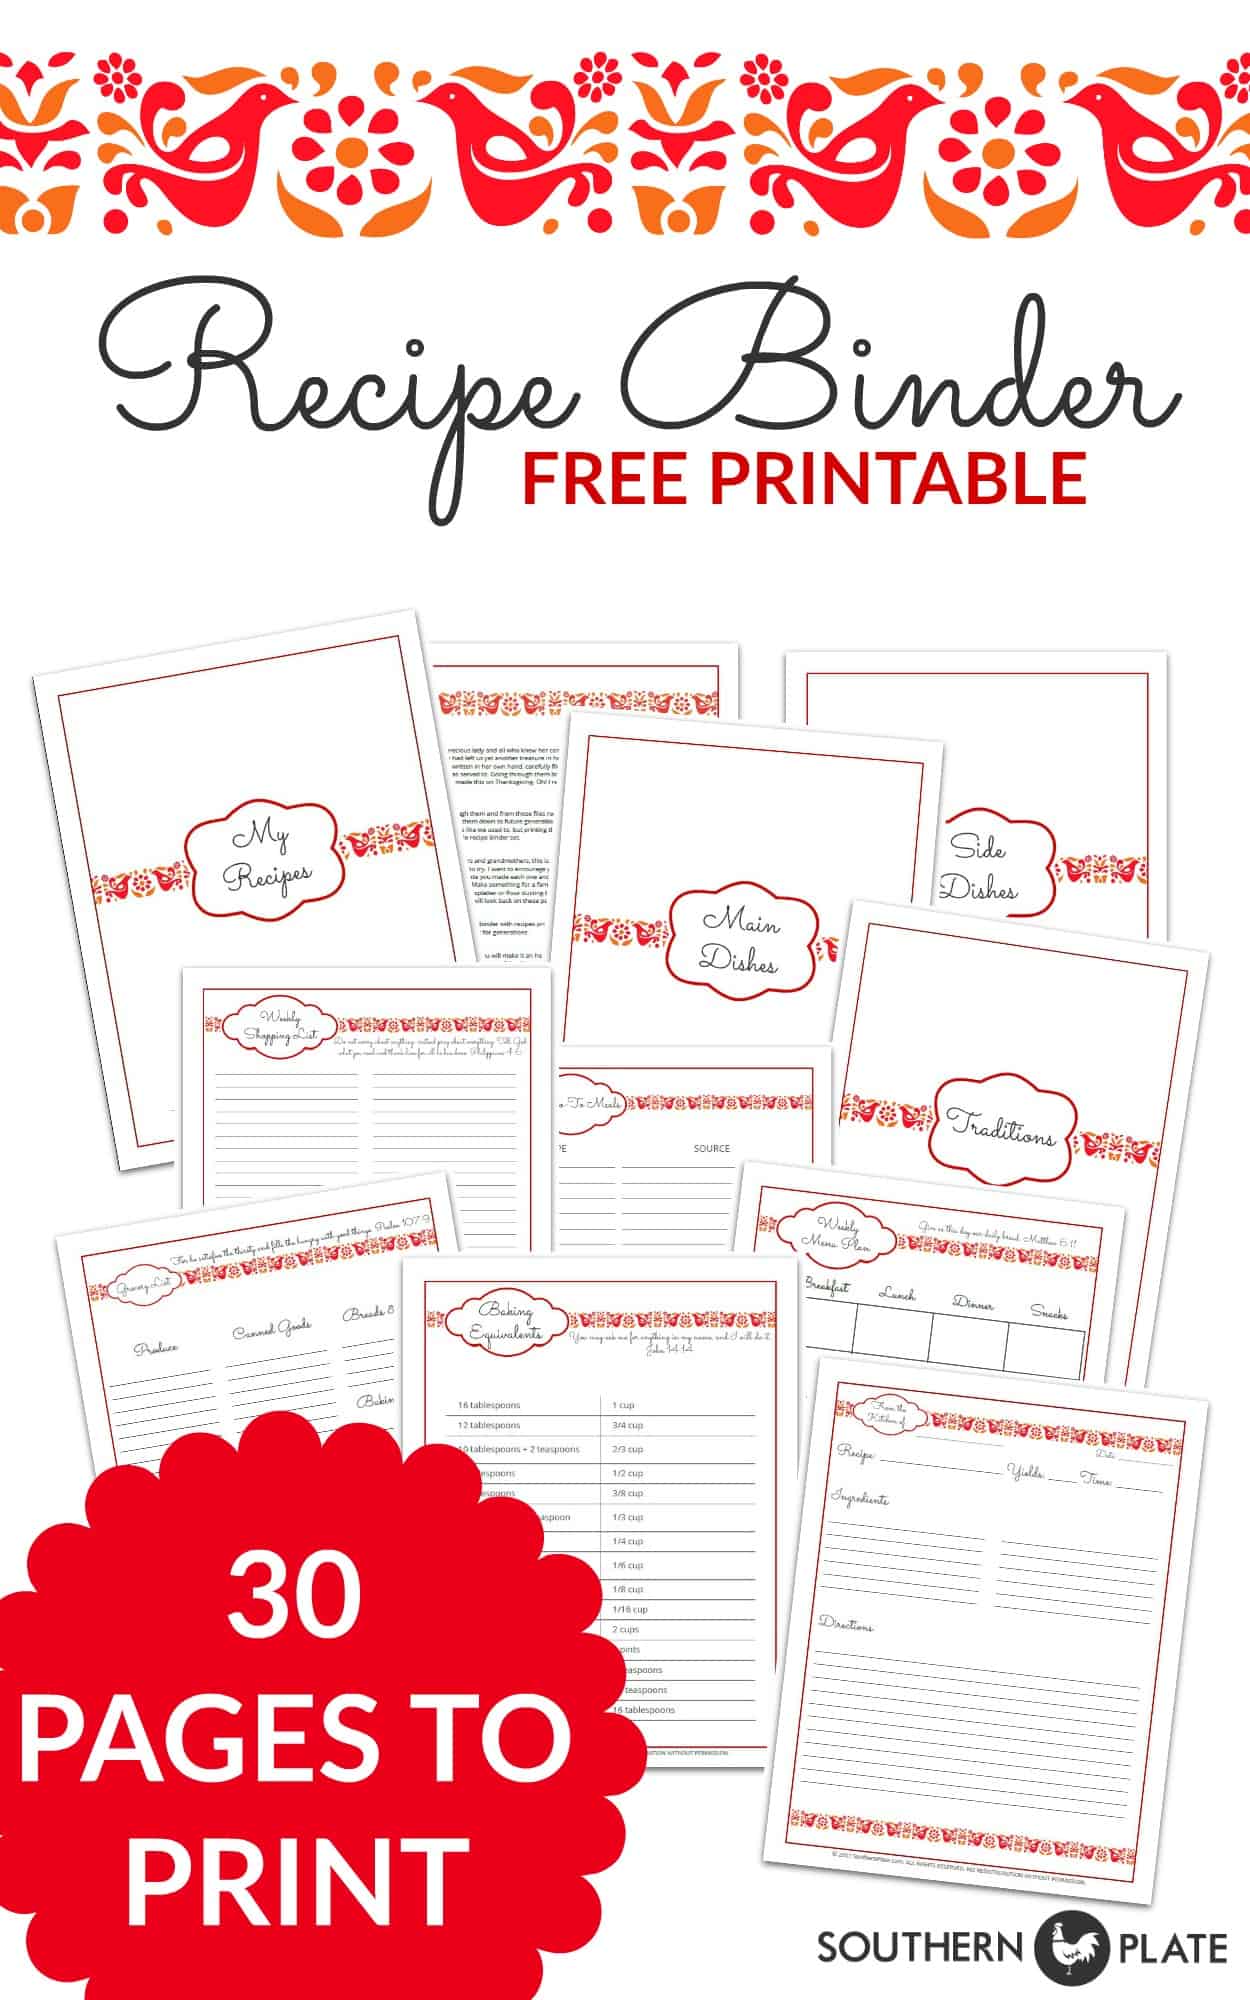 How to Make a Recipe Binder  FREE Recipe Binder Printables